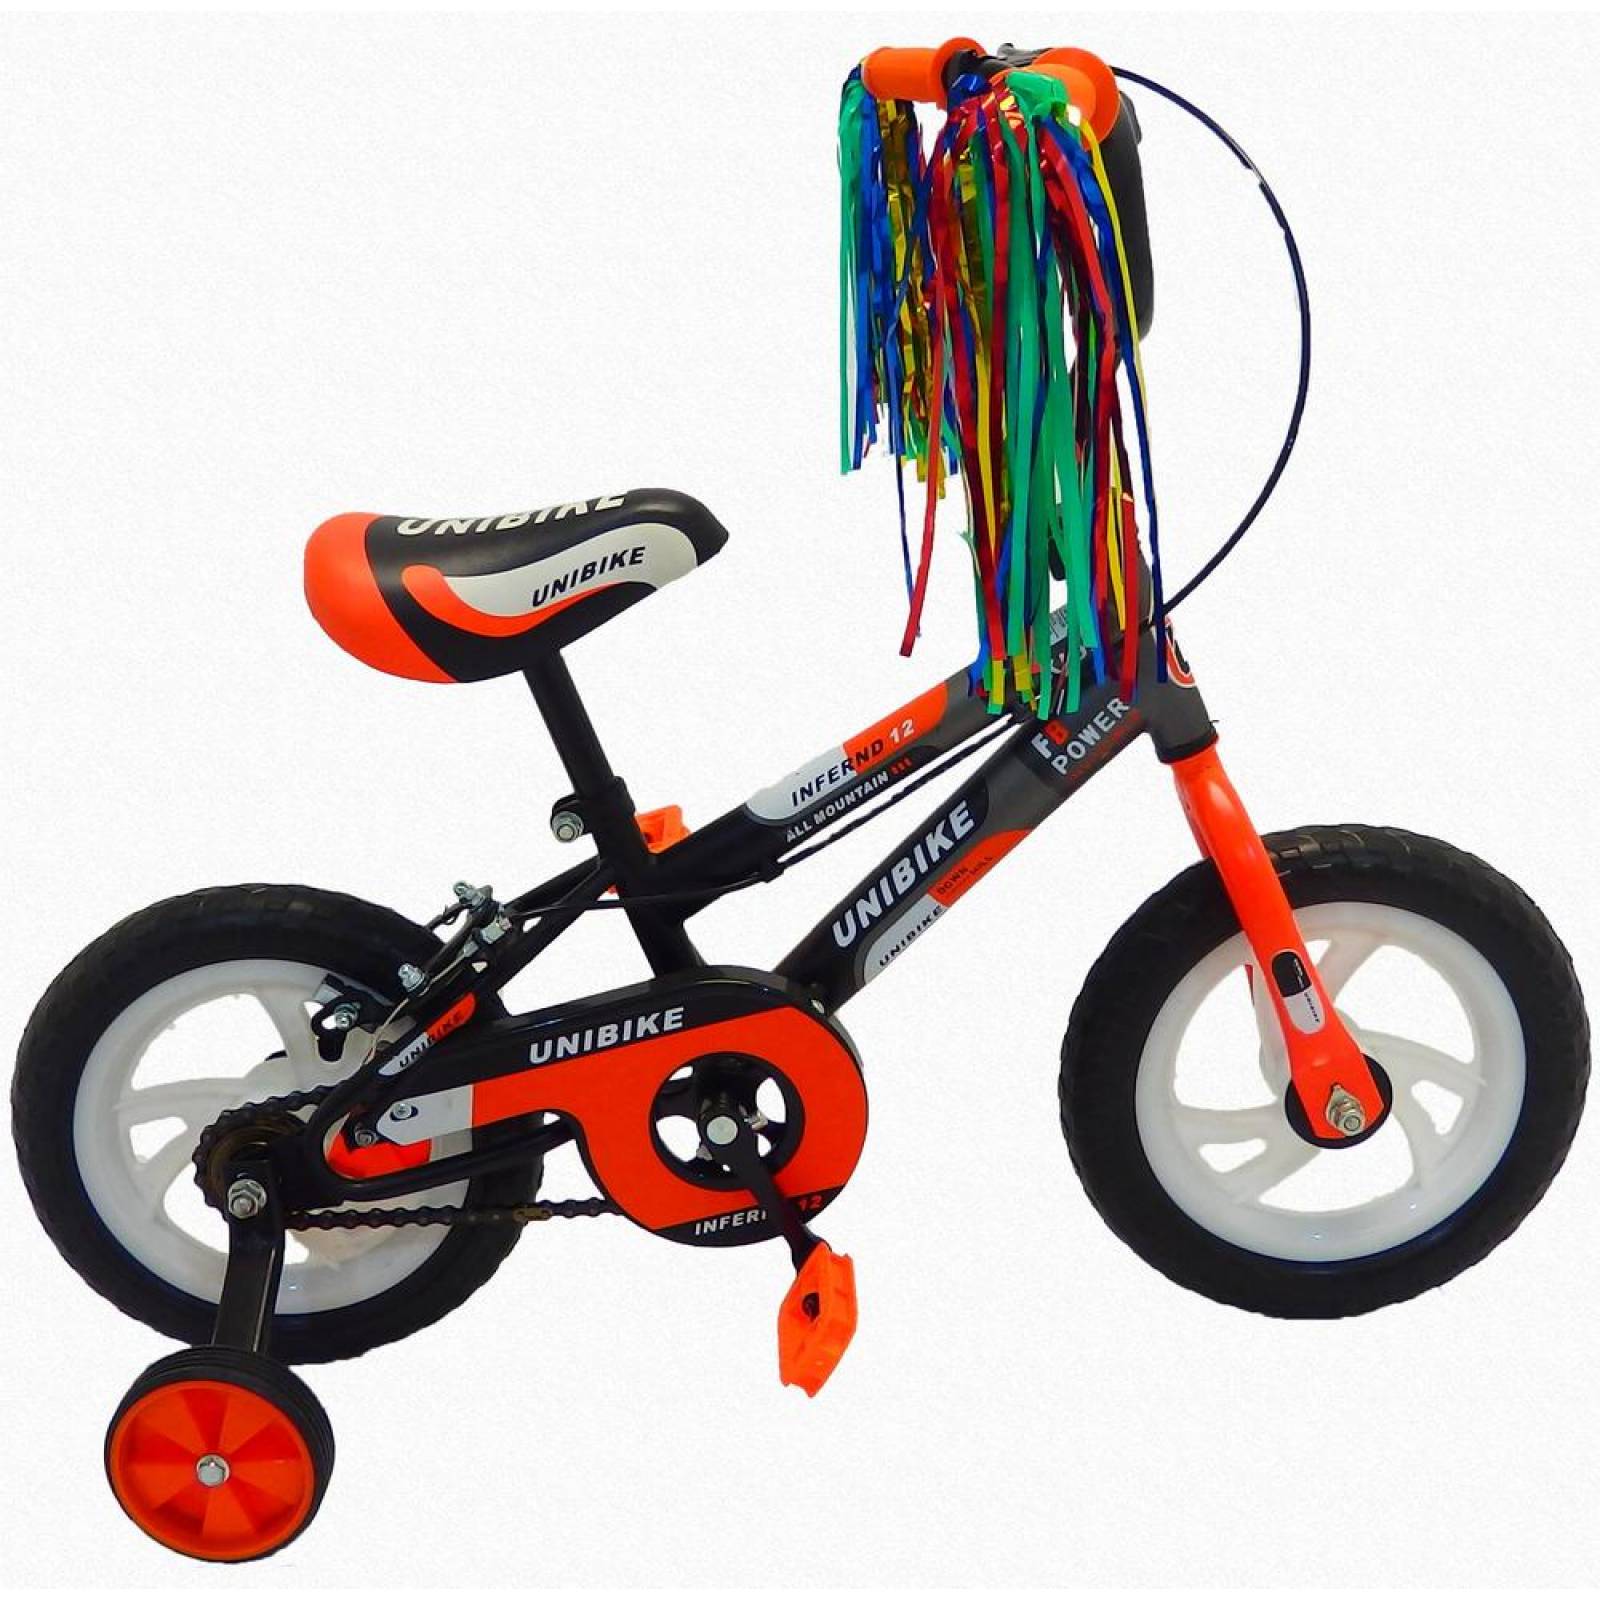 Bicicleta Infantil para niño Rodada 12 con llanta de goma  - Naranja